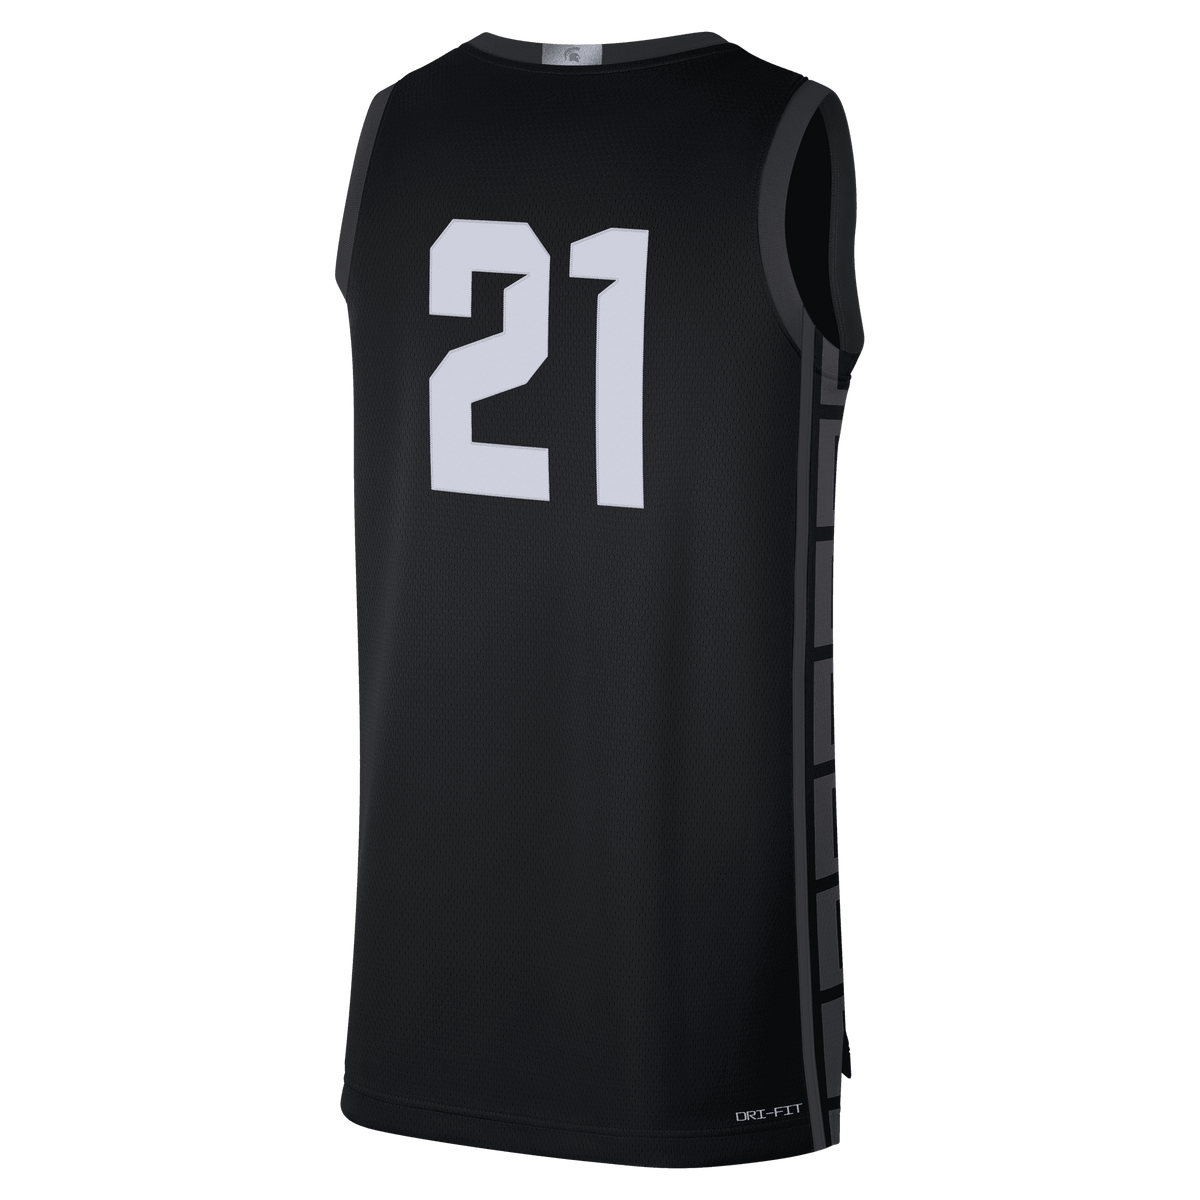 Nike Basketball Jersey in Black